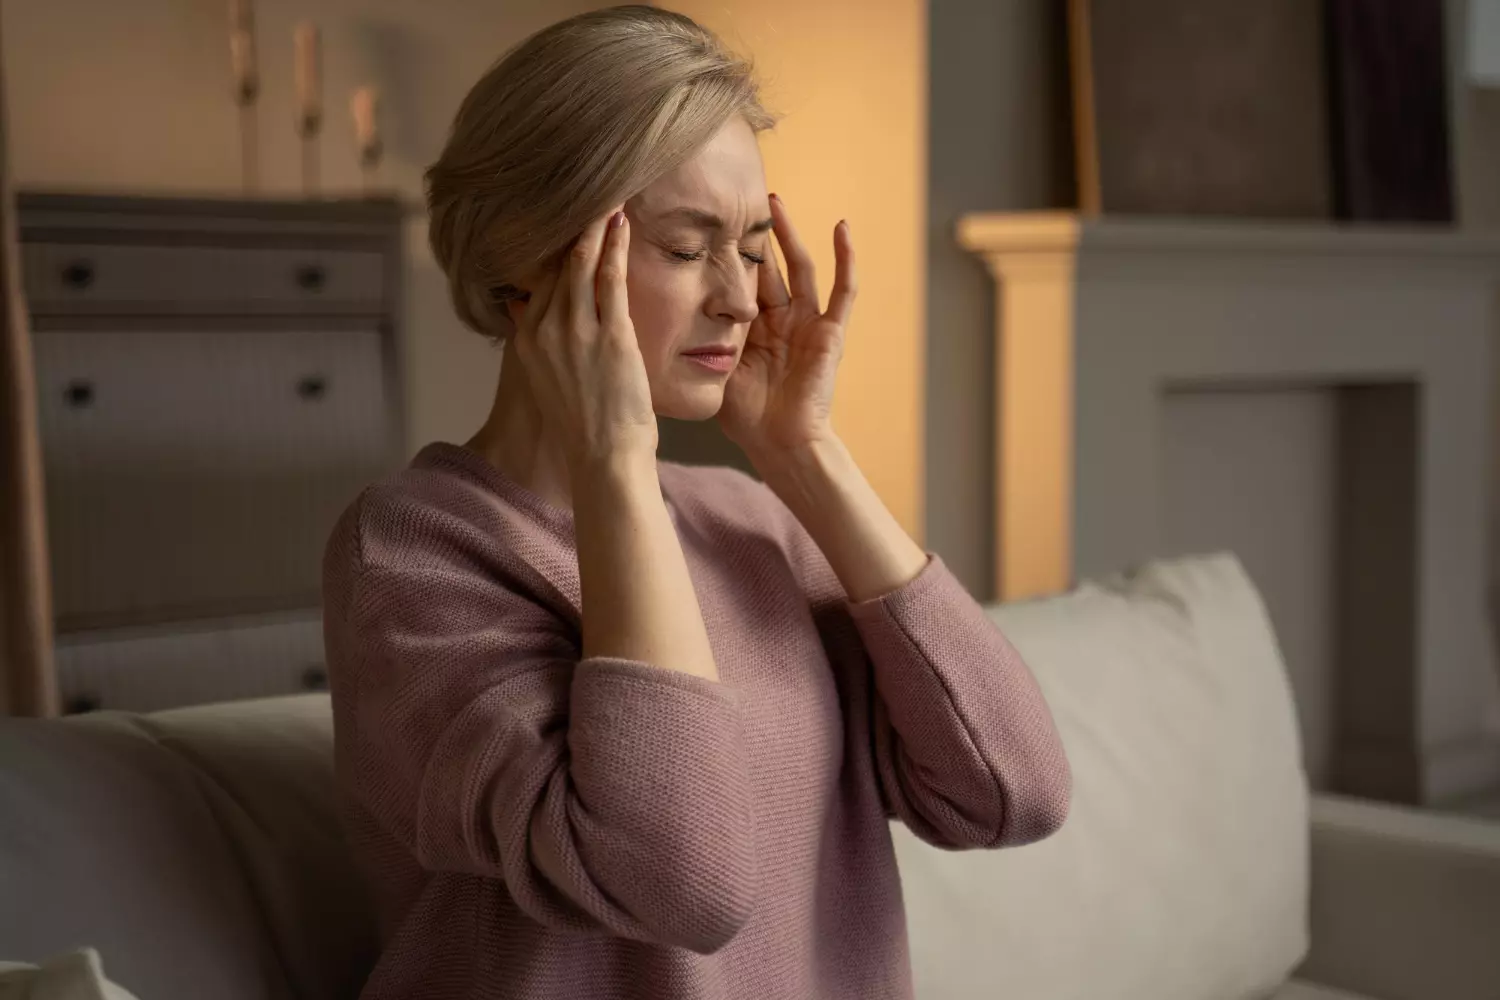 Os principais sintomas iniciais da menopausa